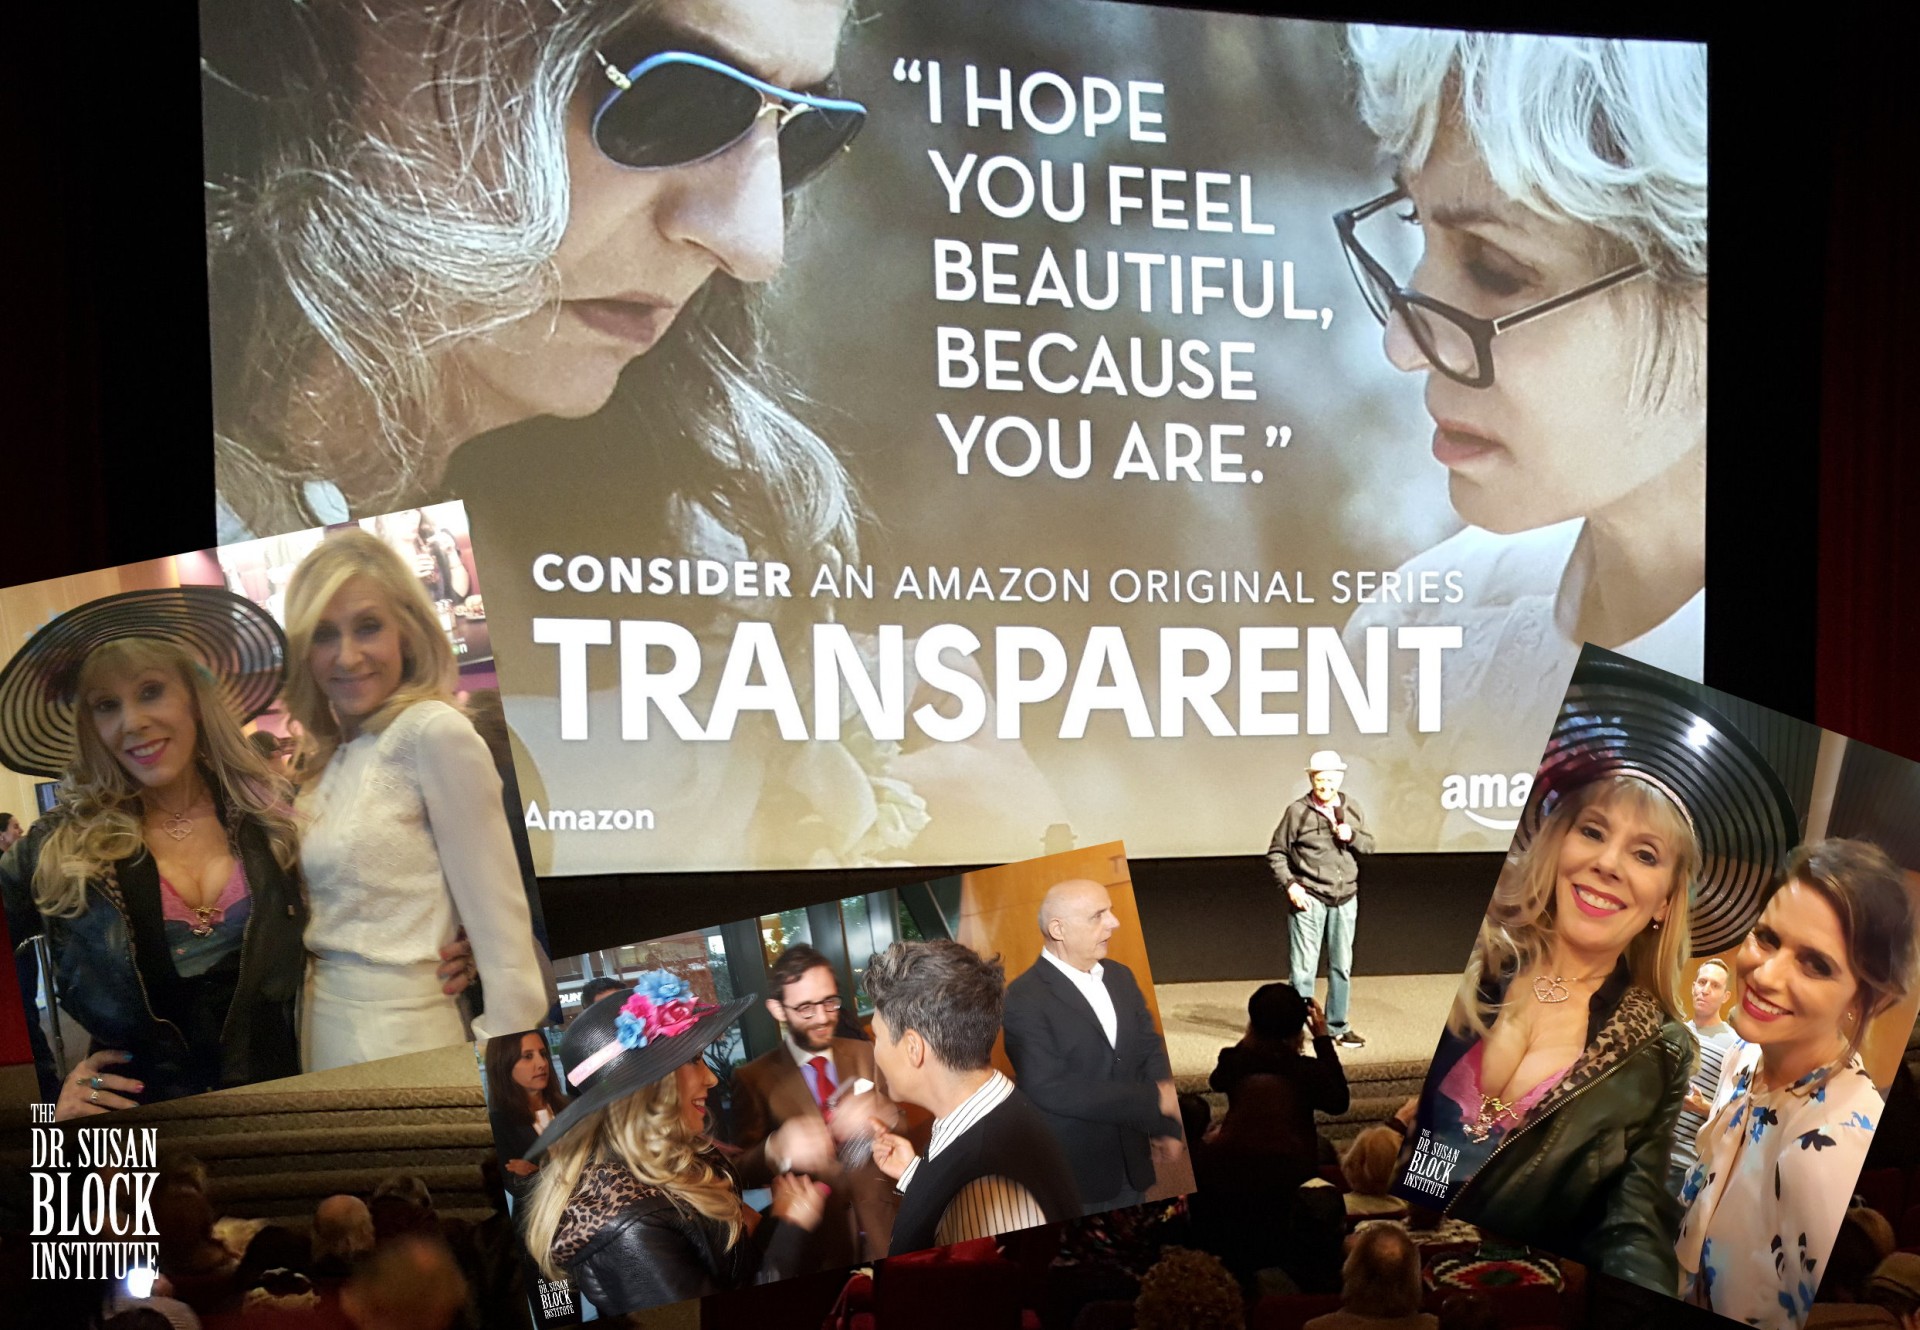 Main Photo: Norman Lear introduces "Transparent" screening at the DGA Theater. Inserts: Dr. Suzy, Judith Light, Luzer Twersky, Jill Soloway, Jeffrey Tambor, Amy Landecker.